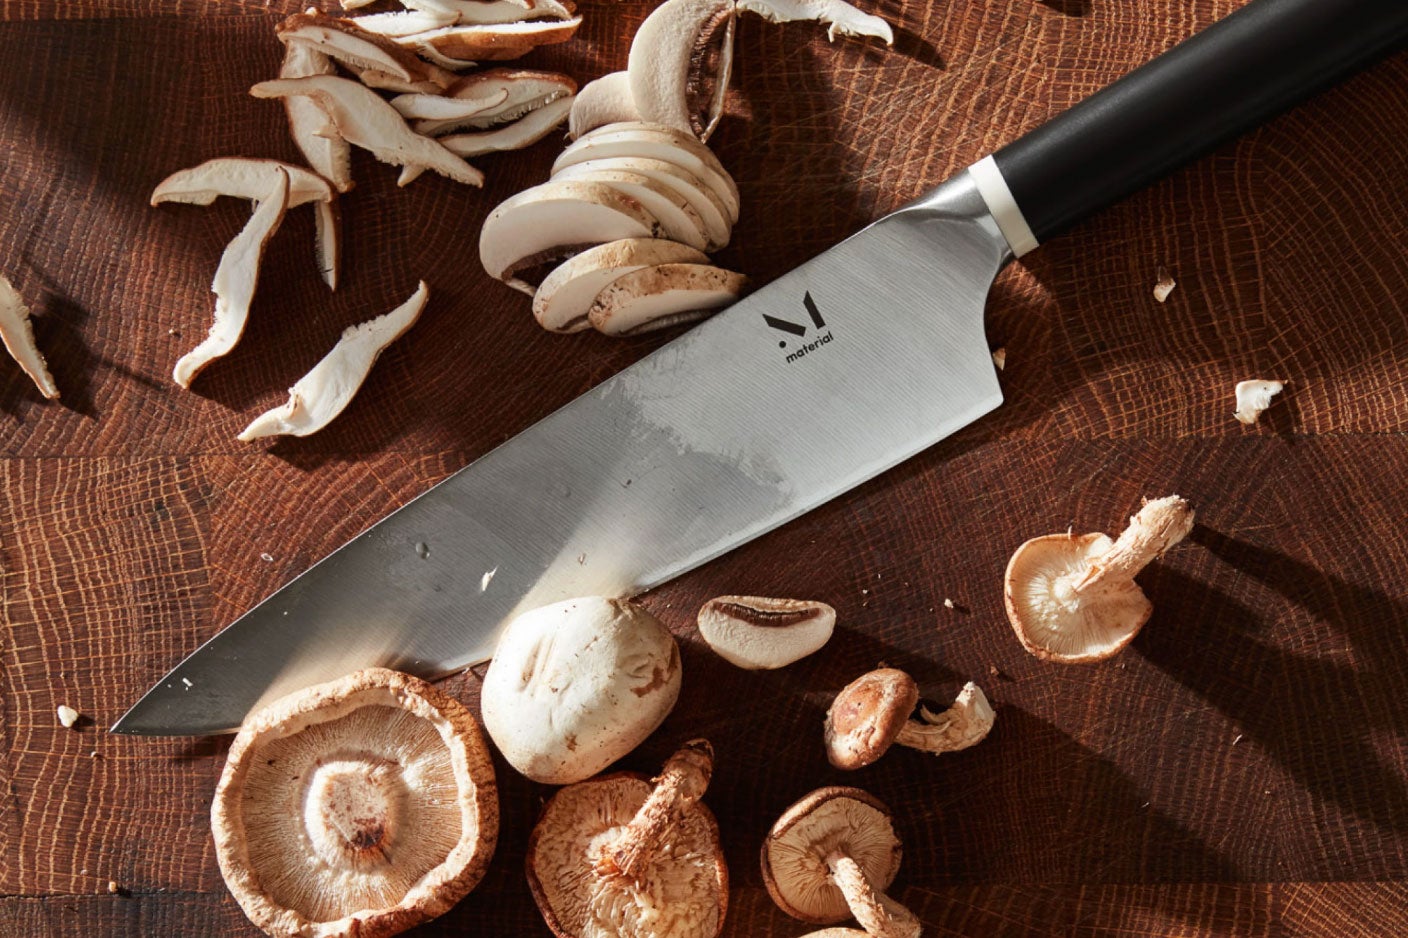 https://www.saveur.com/uploads/2018/01/31/best-chef-knives-material-saveur.jpg?auto=webp